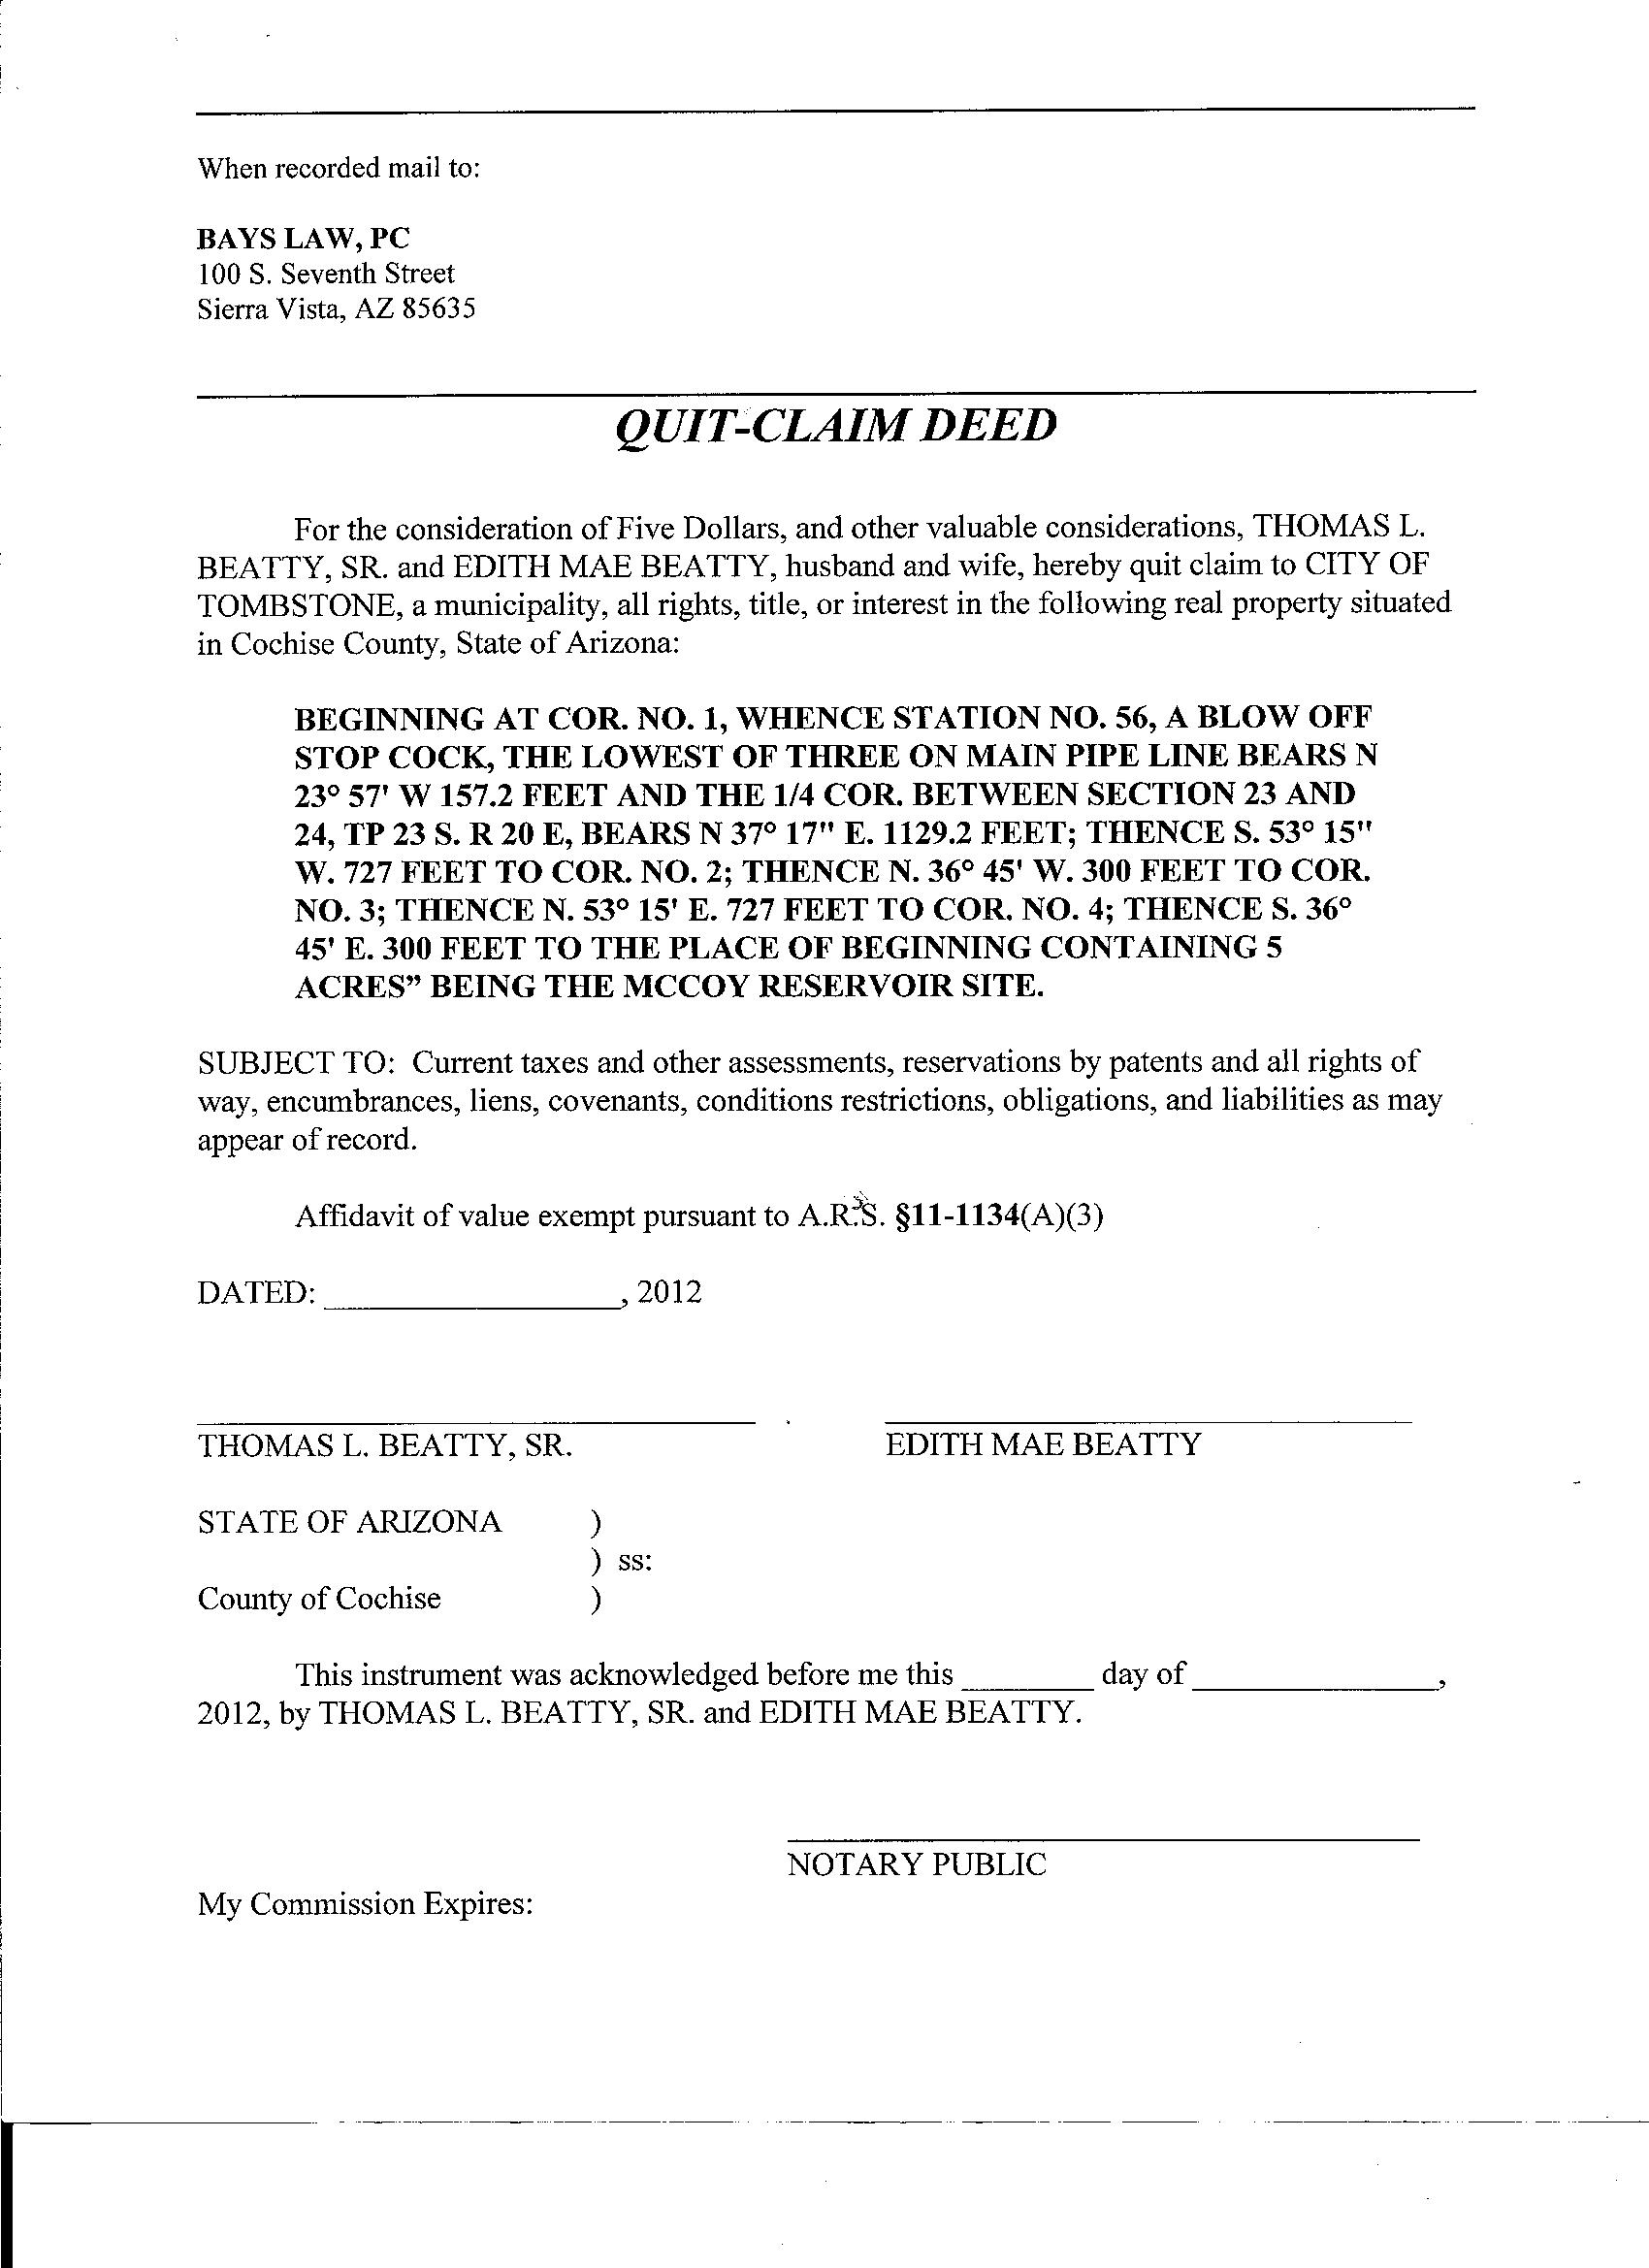 quitclaim-deed-template-free-printable-documents